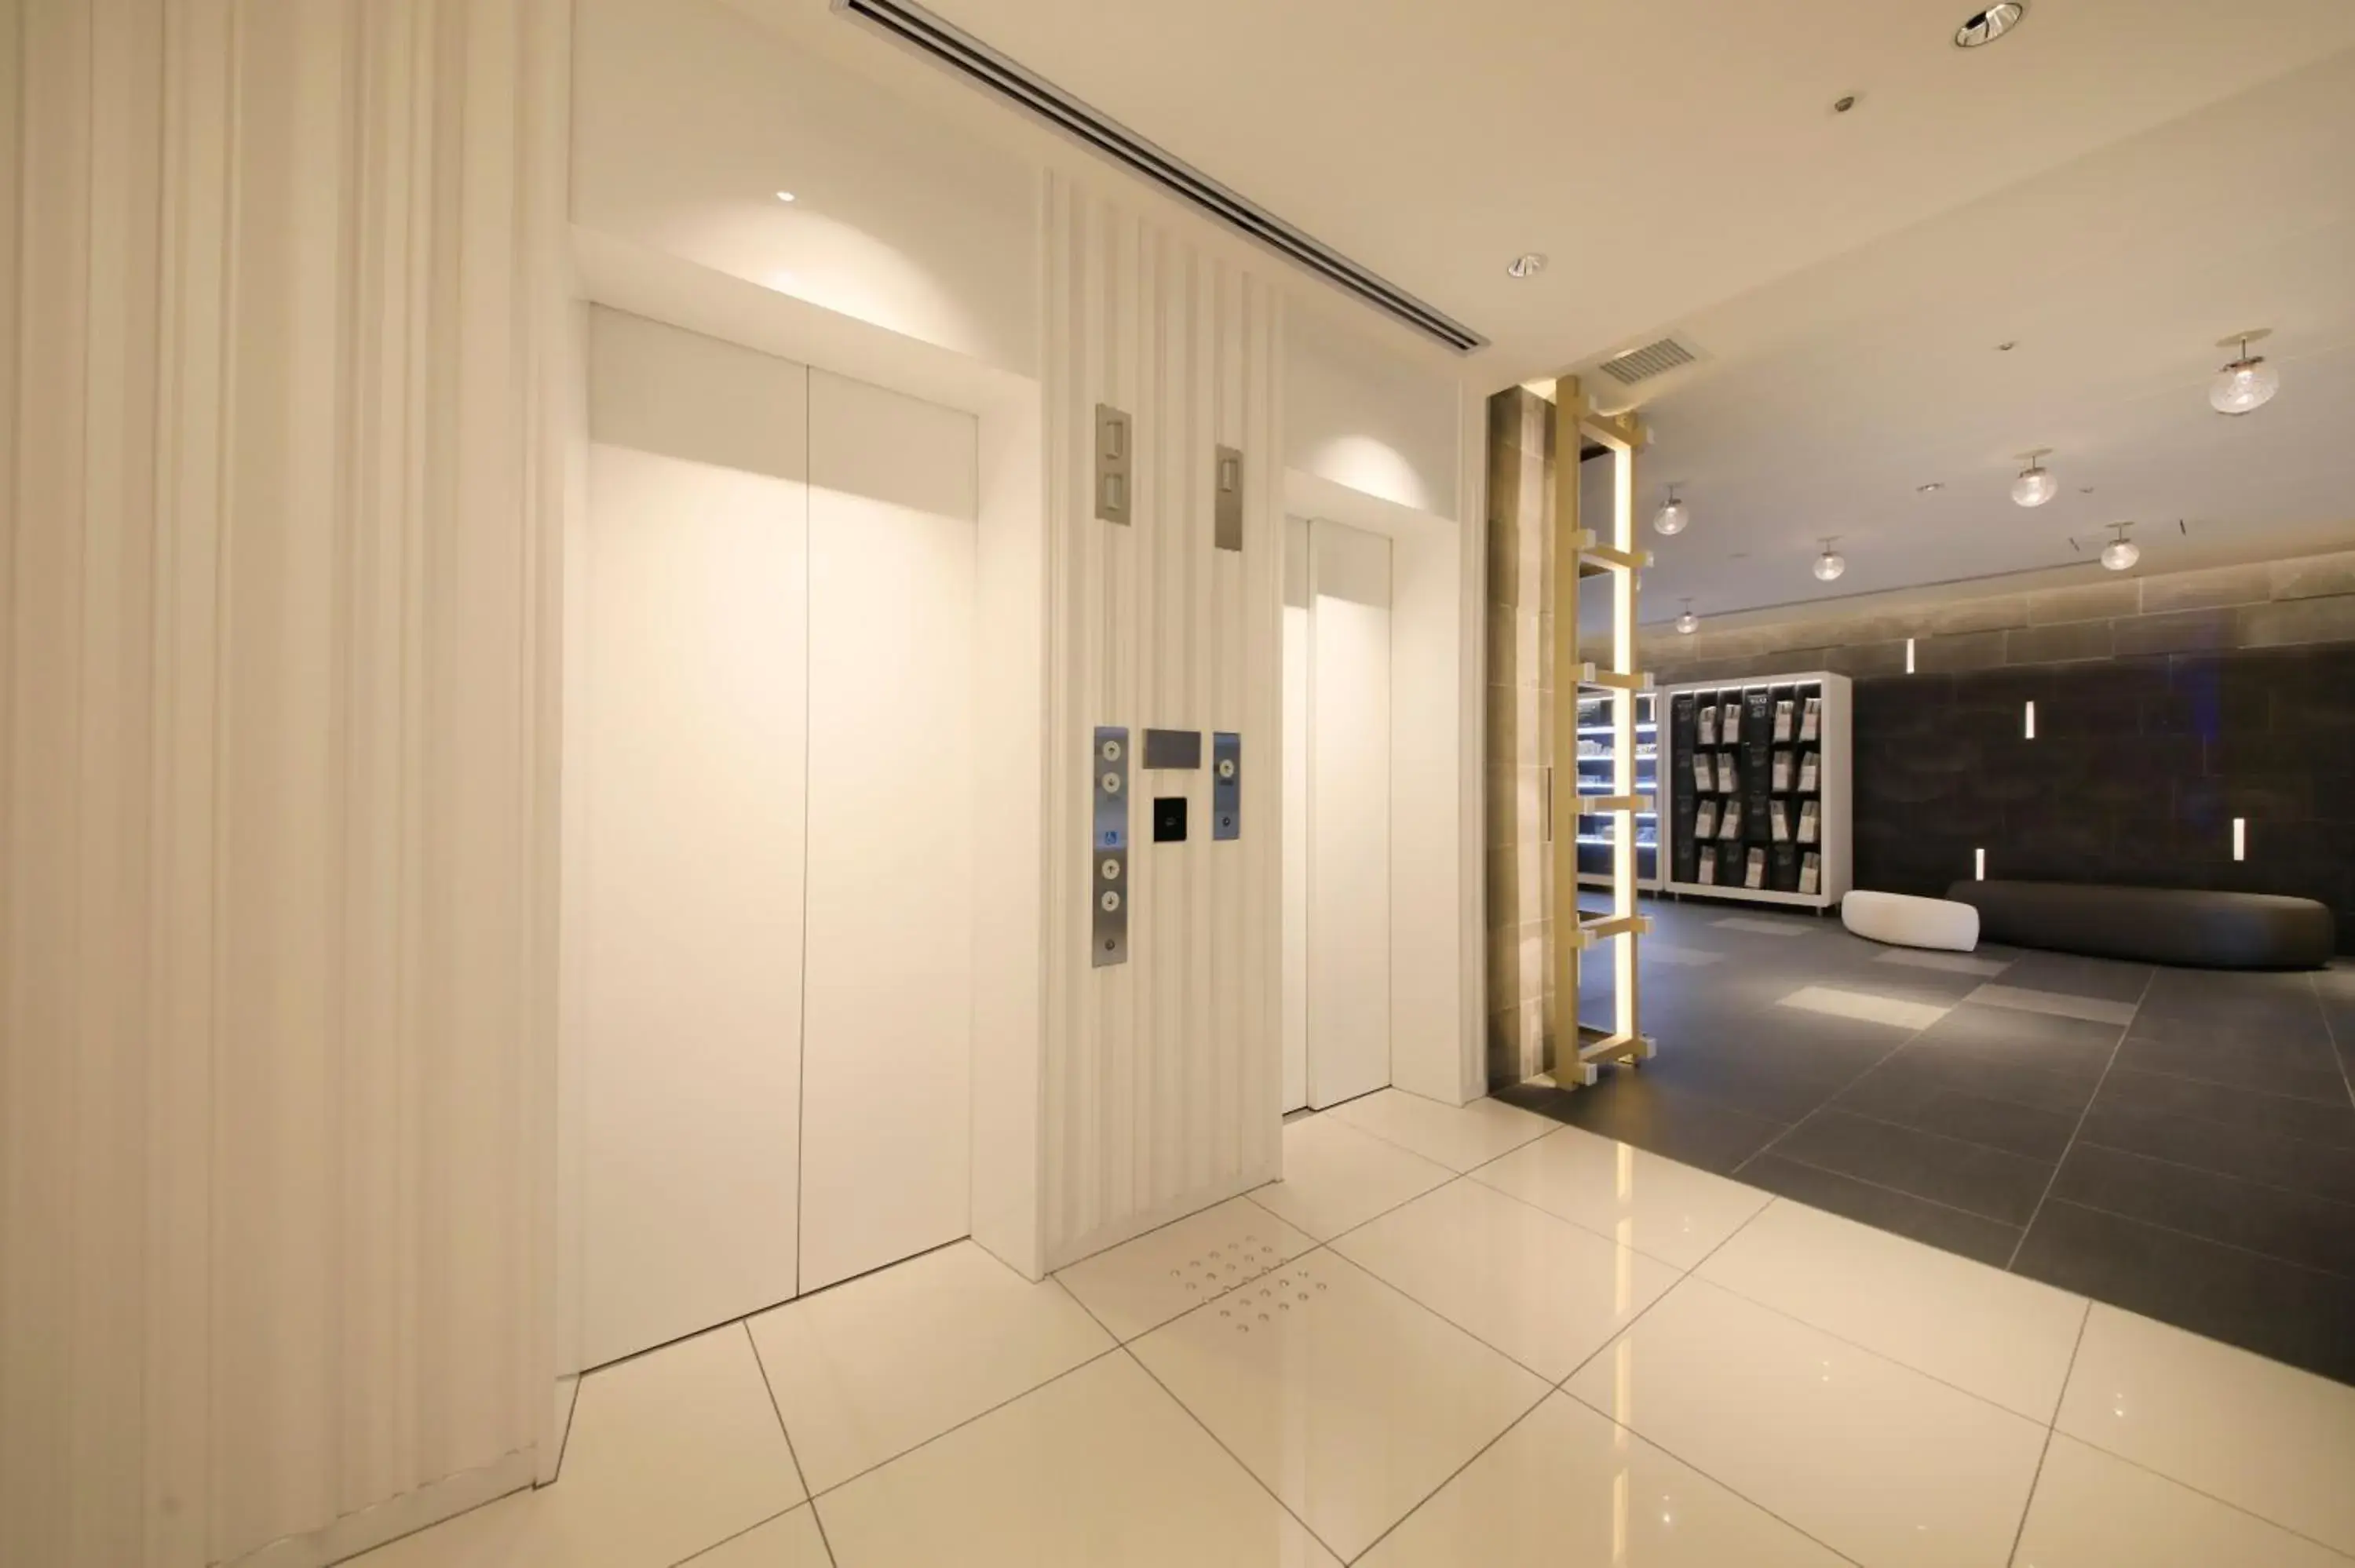 Lobby or reception in S-peria Inn Osaka Hommachi